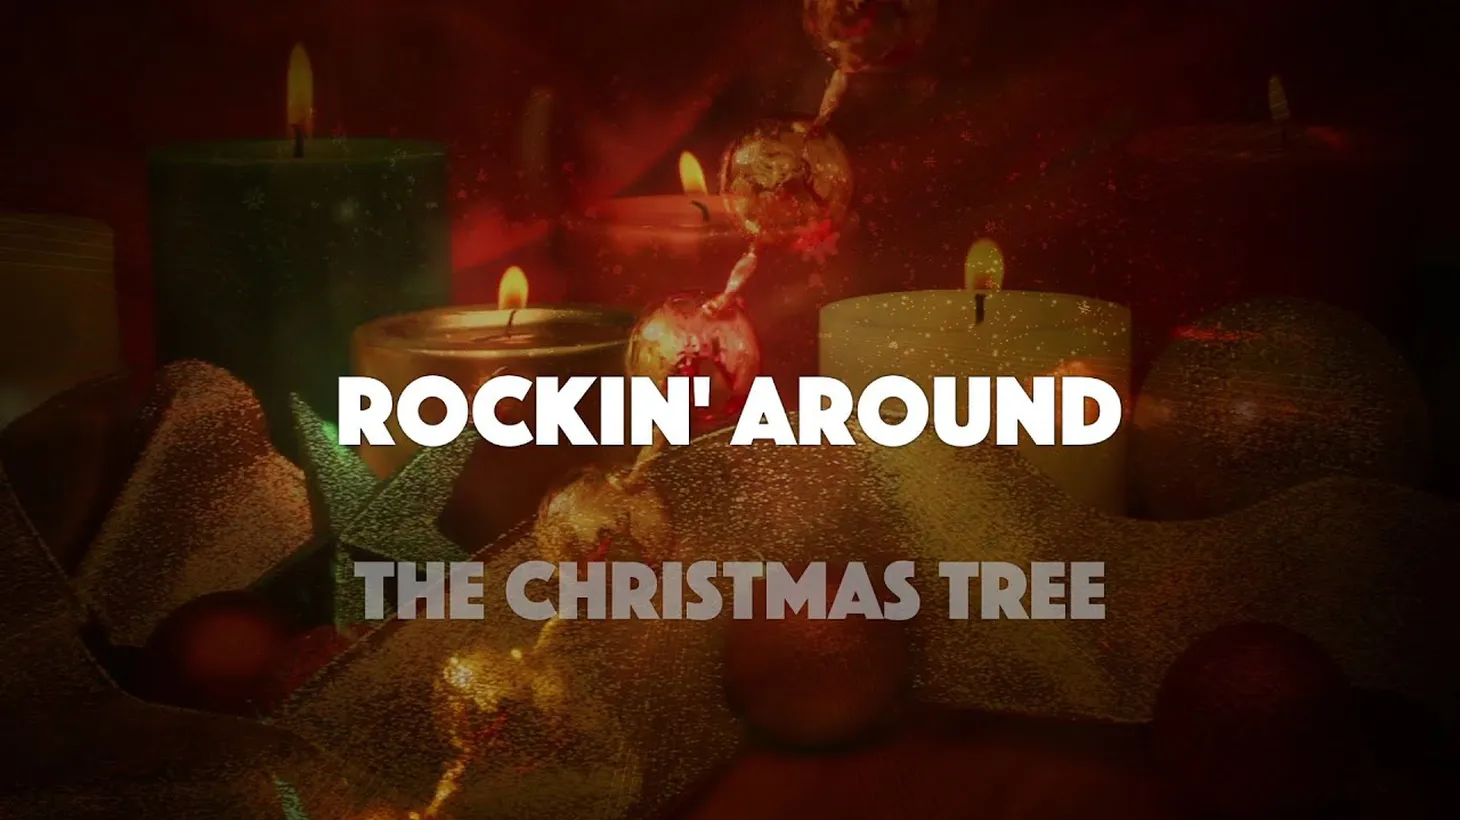 Brenda Lee recorded “Rockin’ Around the Christmas Tree” in 1985.